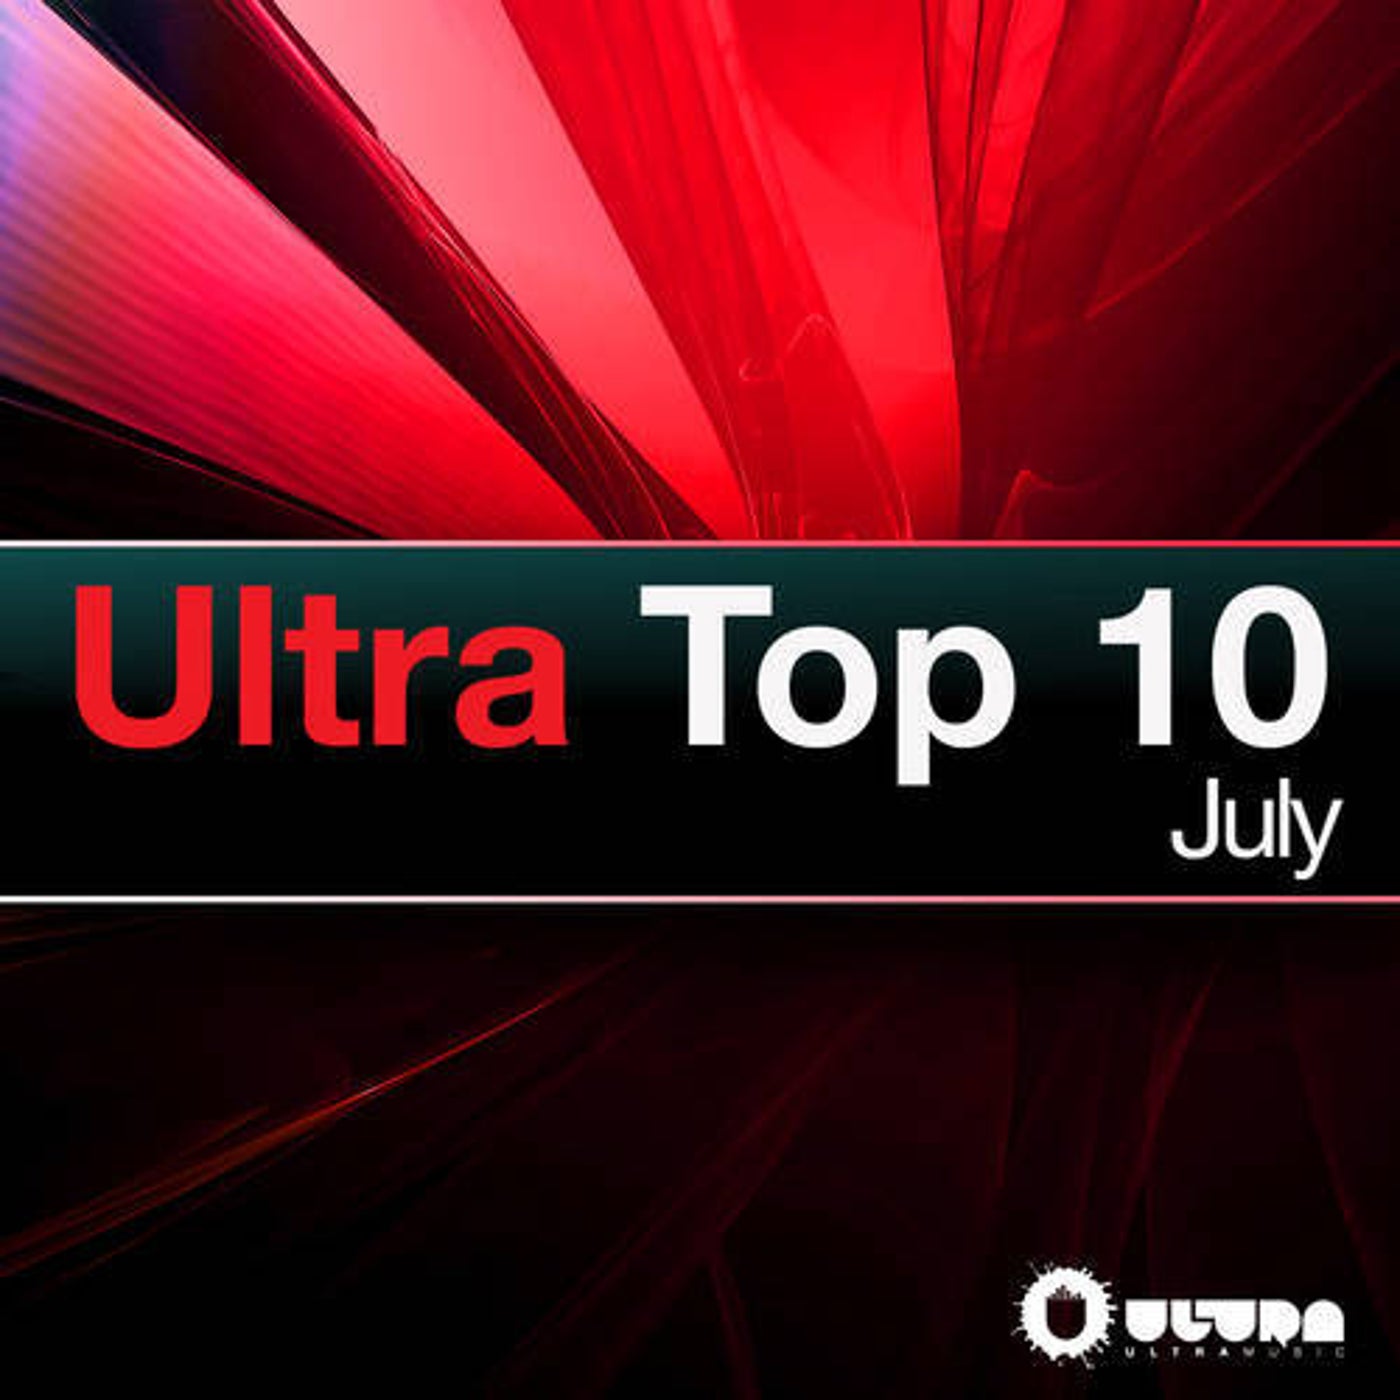 Ultra Top 10 July